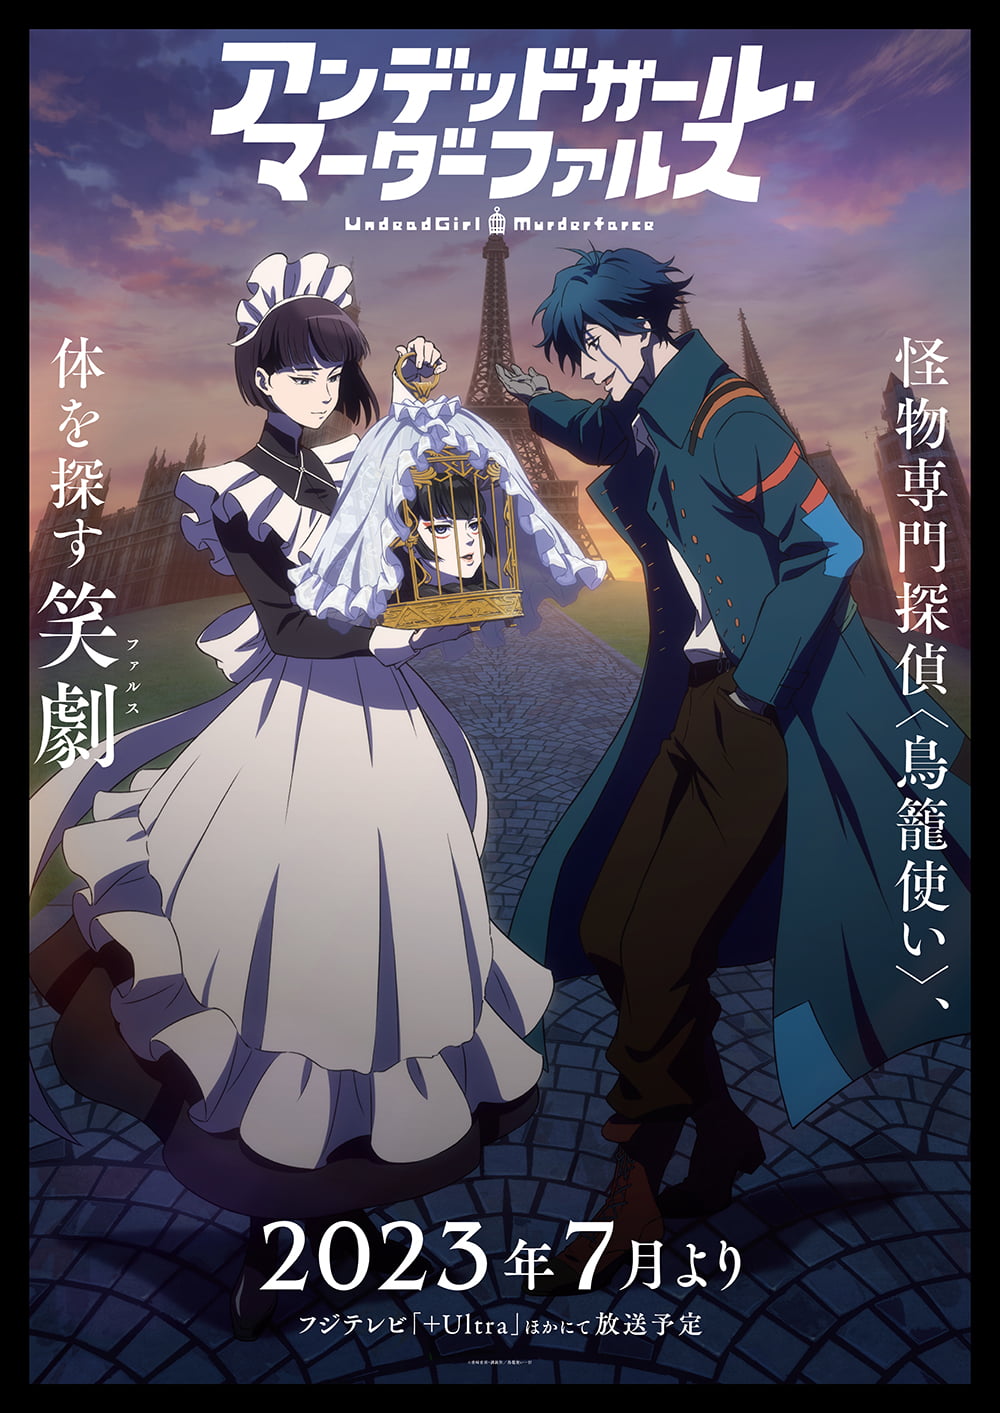 The Path Of Murder Manga Undead Girl Murder Farce Adaptasi Anime Rilis Juli 2023 Lihat Trailer